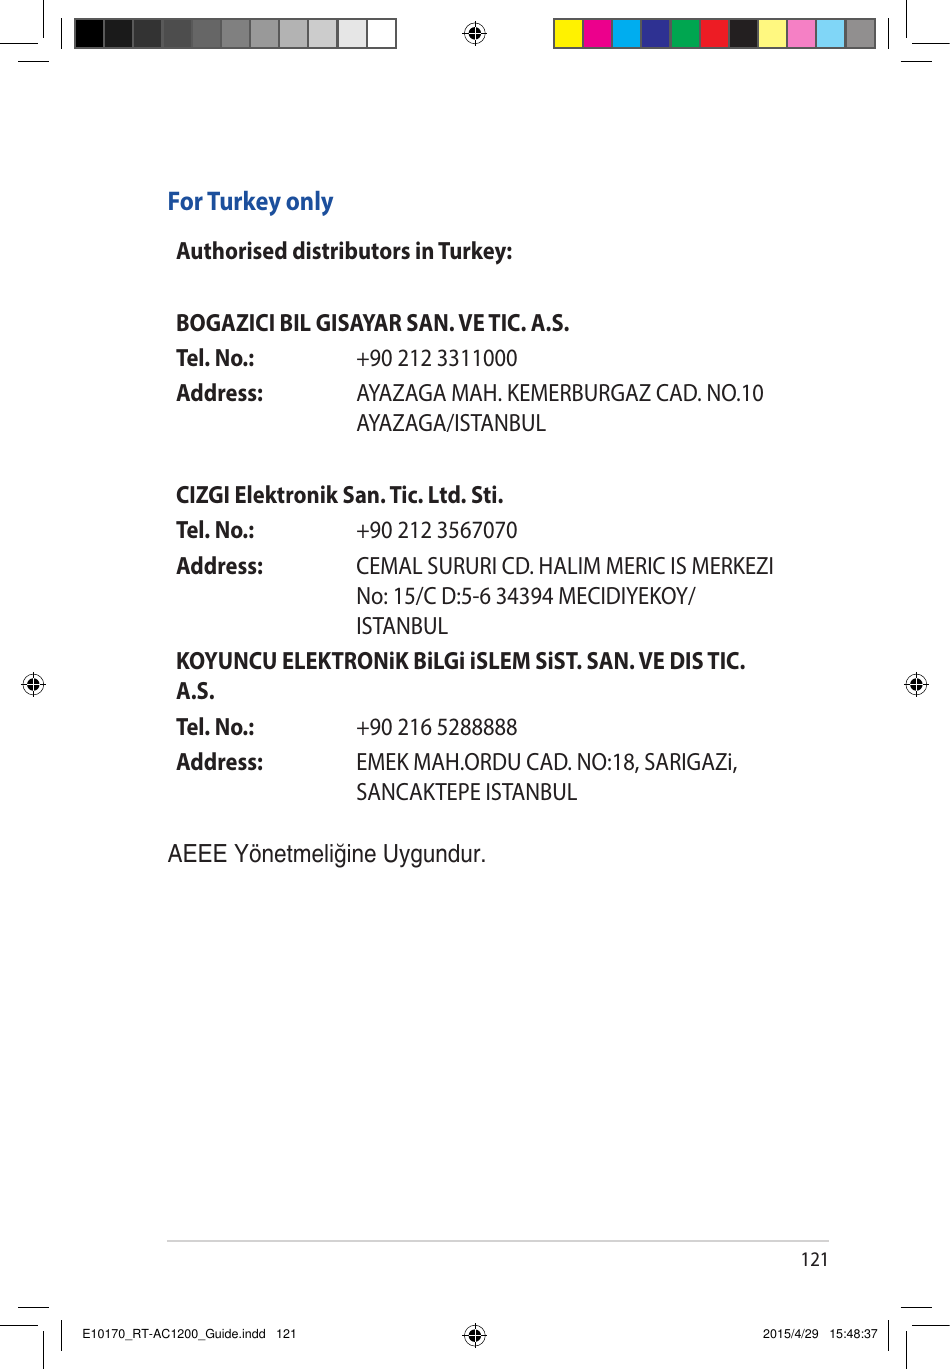 121For Turkey onlyAEEE Yönetmeliğine Uygundur.Authorised distributors in Turkey:BOGAZICI BIL GISAYAR SAN. VE TIC. A.S.Tel. No.:  +90 212 3311000Address: AYAZAGA MAH. KEMERBURGAZ CAD. NO.10 AYAZAGA/ISTANBULCIZGI Elektronik San. Tic. Ltd. Sti.Tel. No.:  +90 212 3567070Address: CEMAL SURURI CD. HALIM MERIC IS MERKEZI No: 15/C D:5-6 34394 MECIDIYEKOY/ISTANBULKOYUNCU ELEKTRONiK BiLGi iSLEM SiST. SAN. VE DIS TIC. A.S.Tel. No.:  +90 216 5288888Address: EMEK MAH.ORDU CAD. NO:18, SARIGAZi, SANCAKTEPE ISTANBULE10170_RT-AC1200_Guide.indd   121 2015/4/29   15:48:37